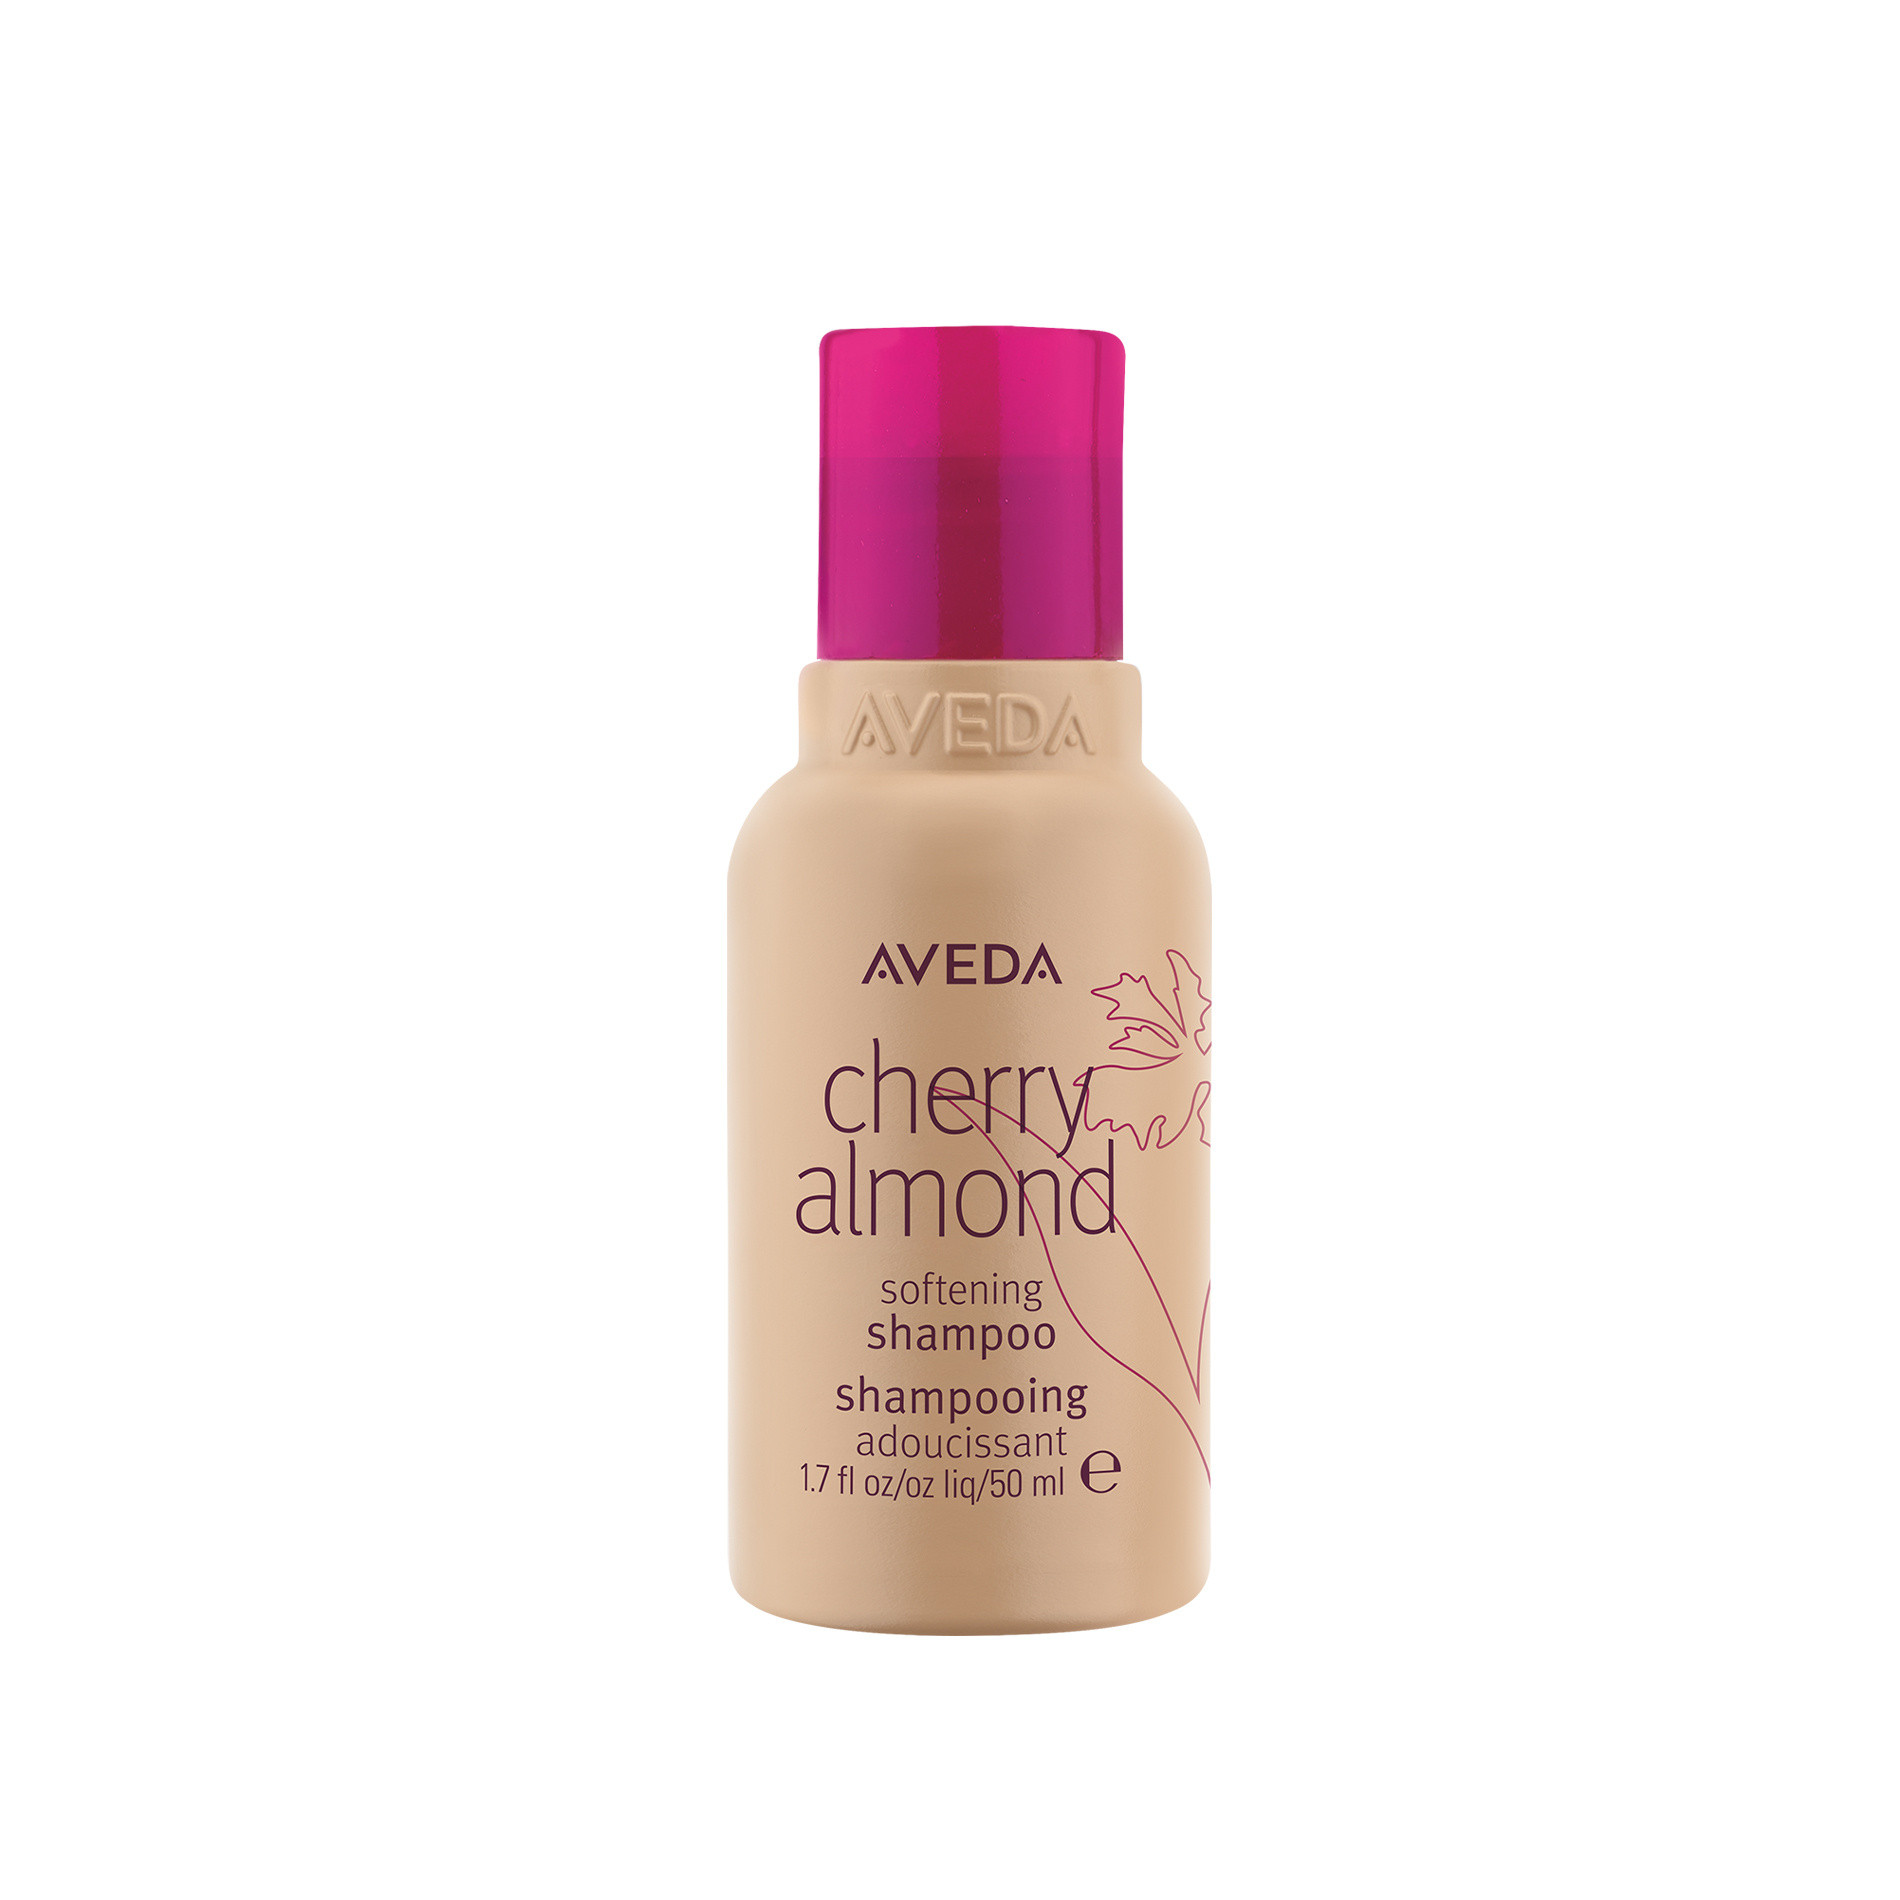 Aveda cherry almond shampoo delicato 50 ml, Beige, large